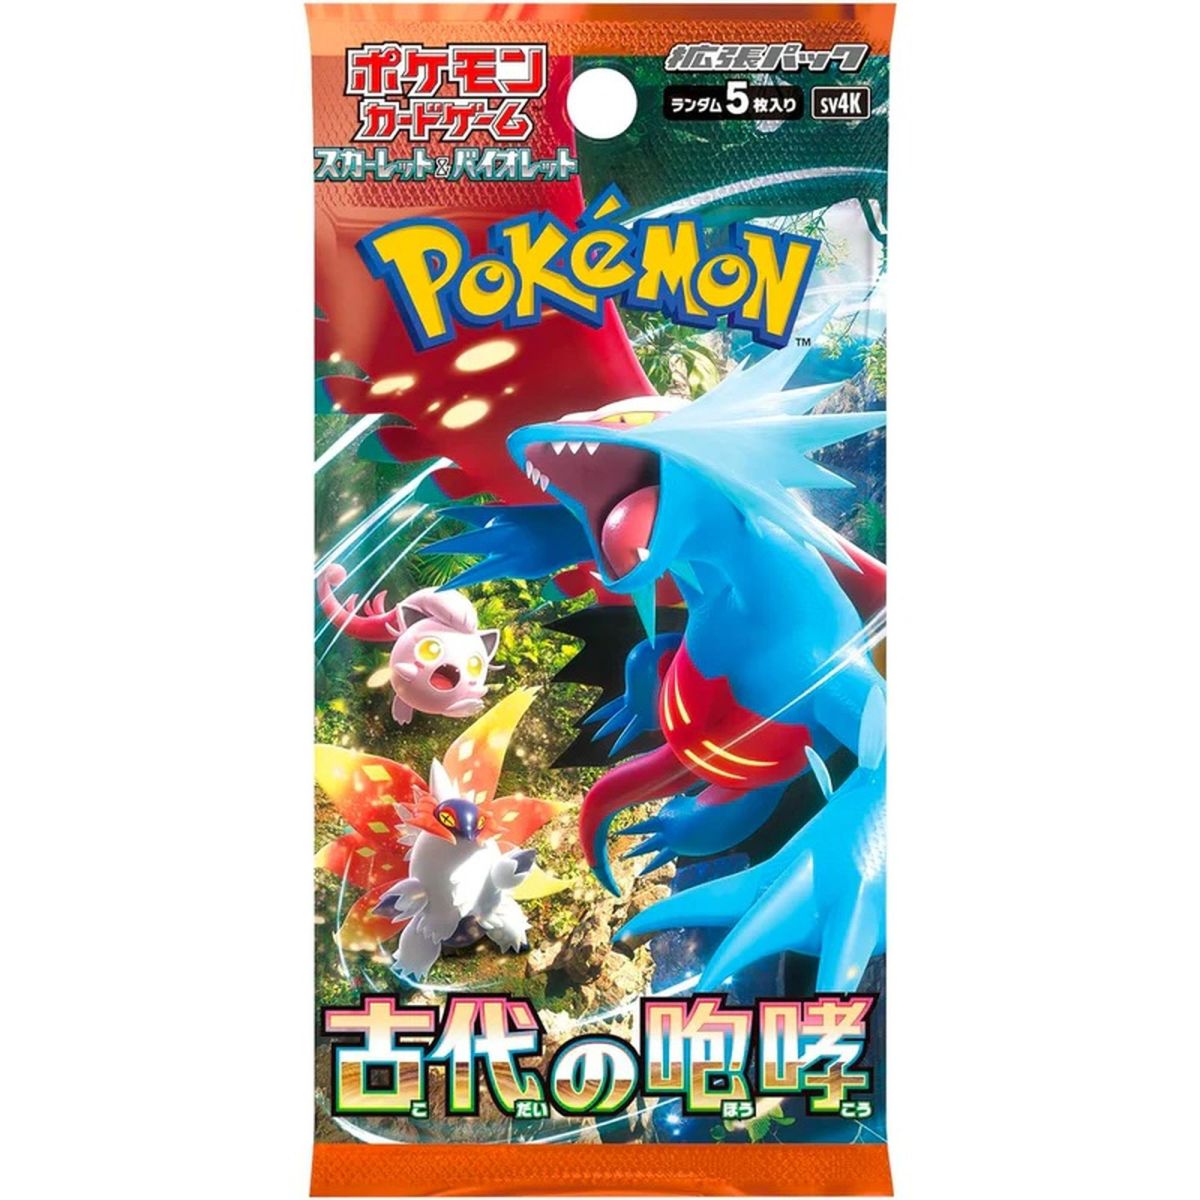 Pokémon – Booster – Ancient Roar [SV4K] – JP